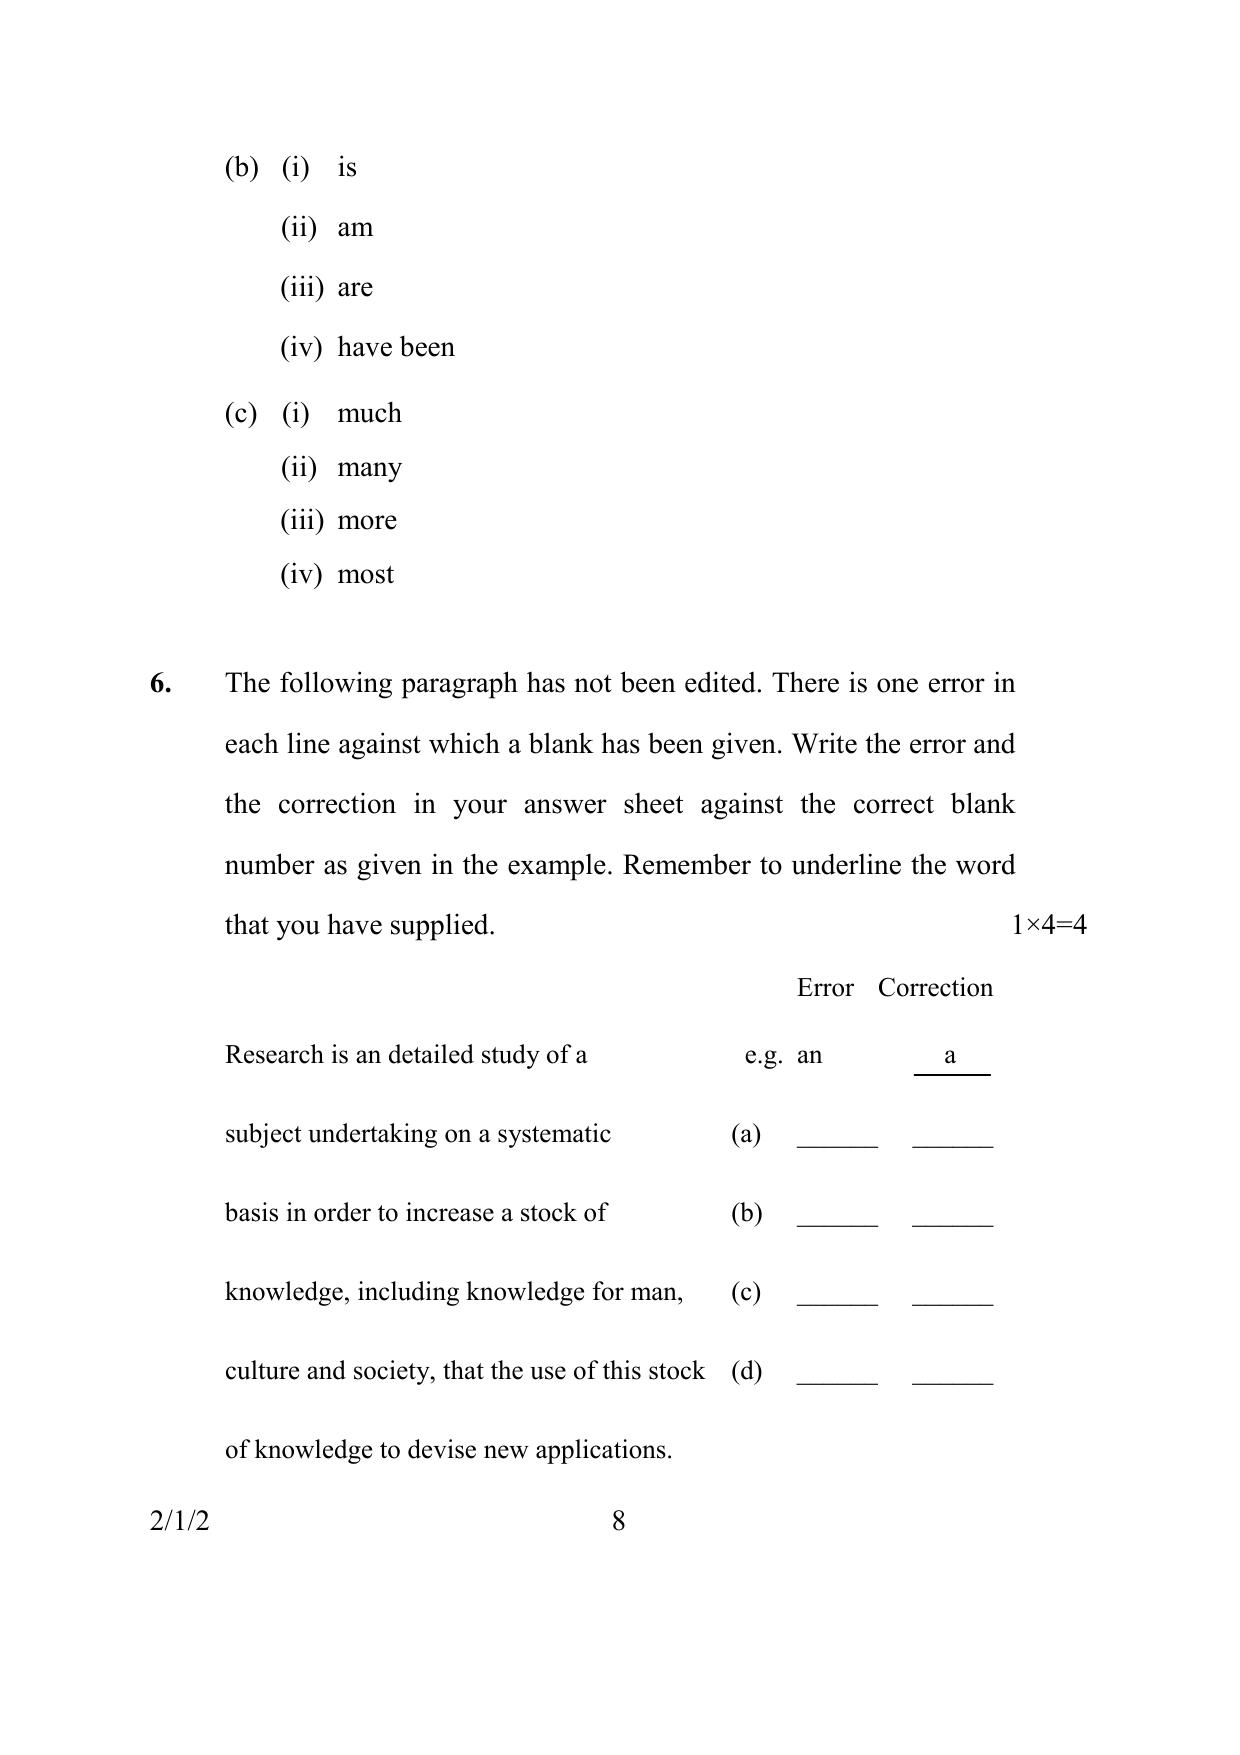 CBSE Class 10 2-1-2 ENGLISH LANGUAGE & LIT. 2016 Question Paper - Page 8